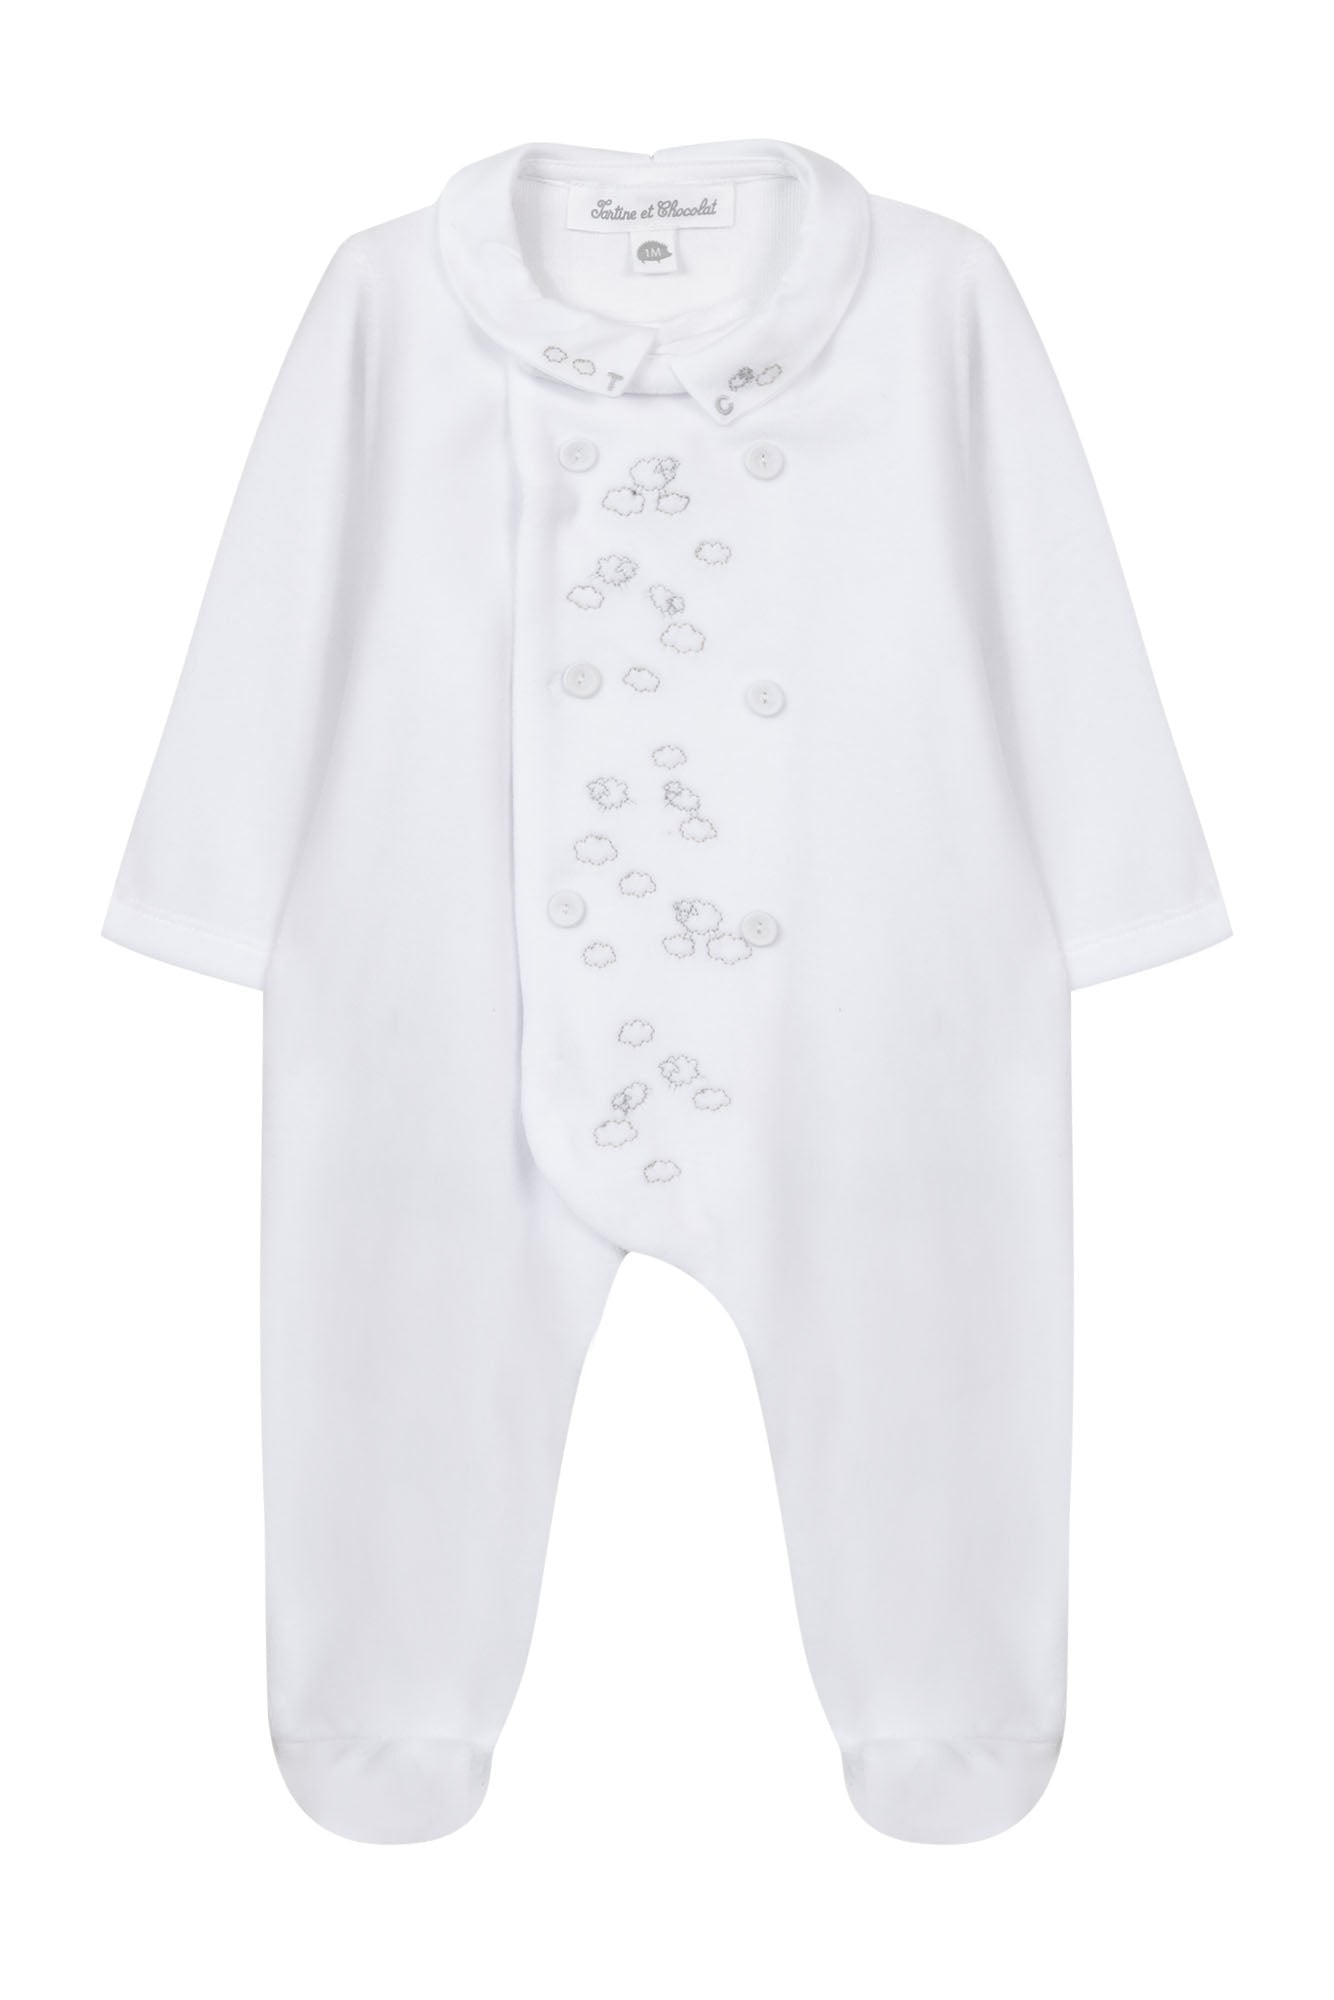 Pyjama - Blanc broderie hivernal garçon